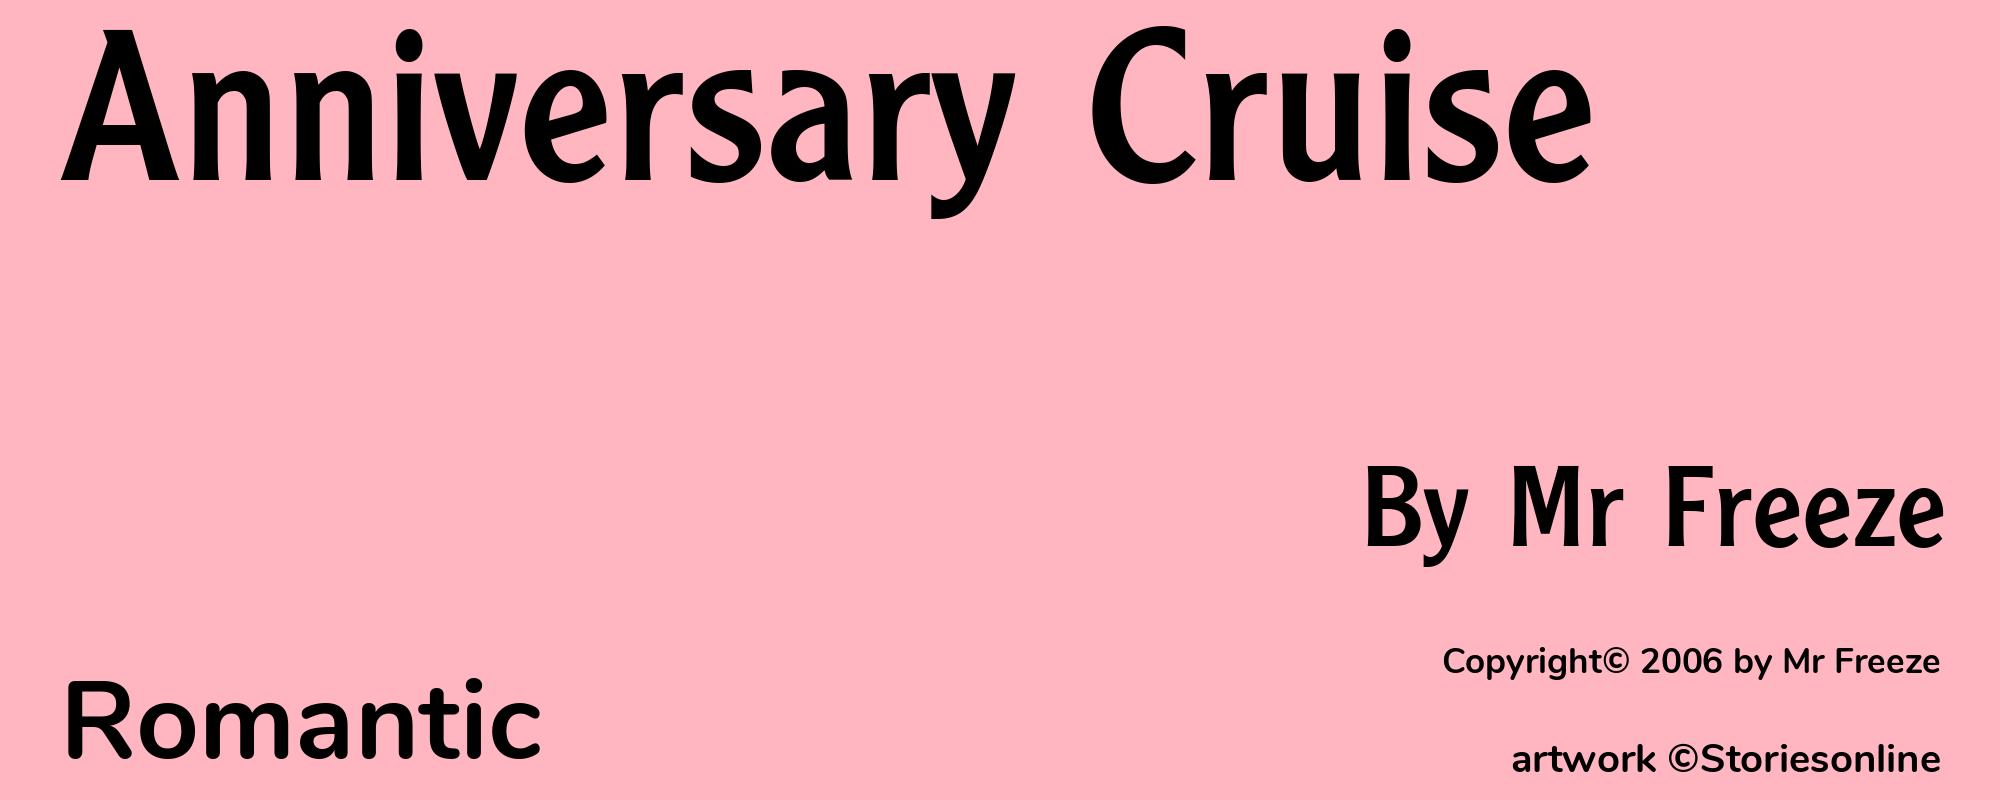 Anniversary Cruise - Cover